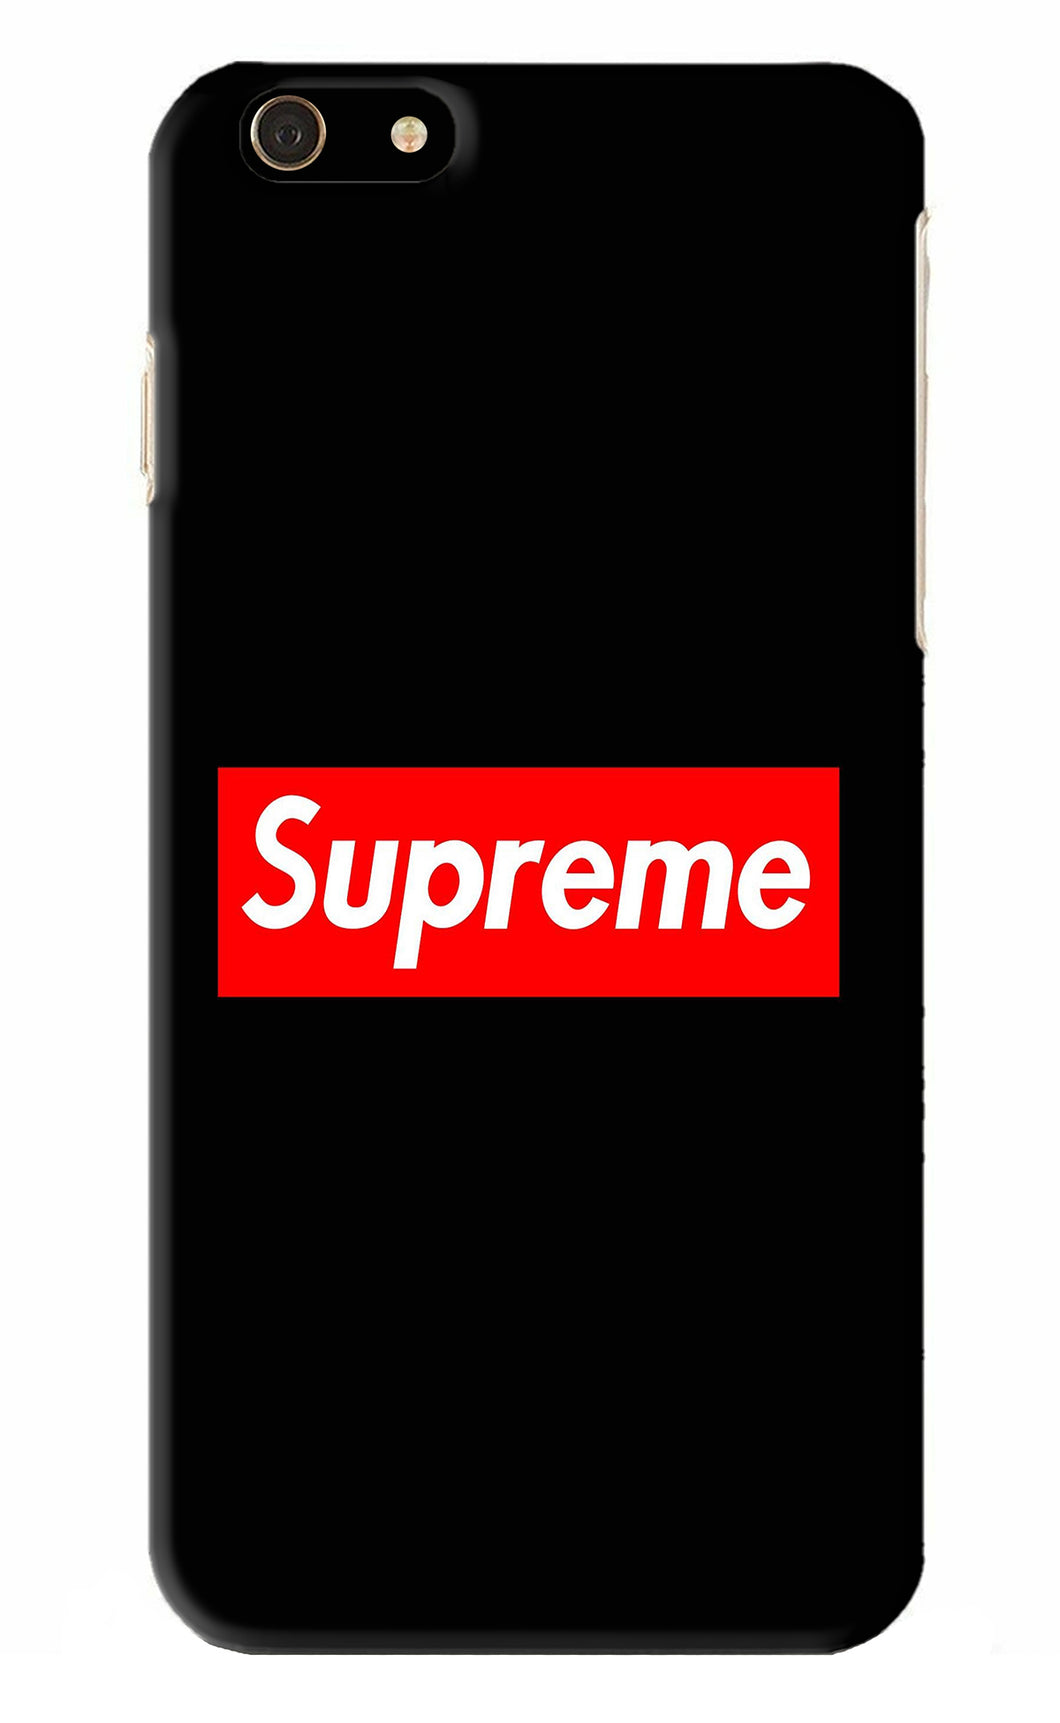 Supreme iPhone 6 Plus Back Skin Wrap